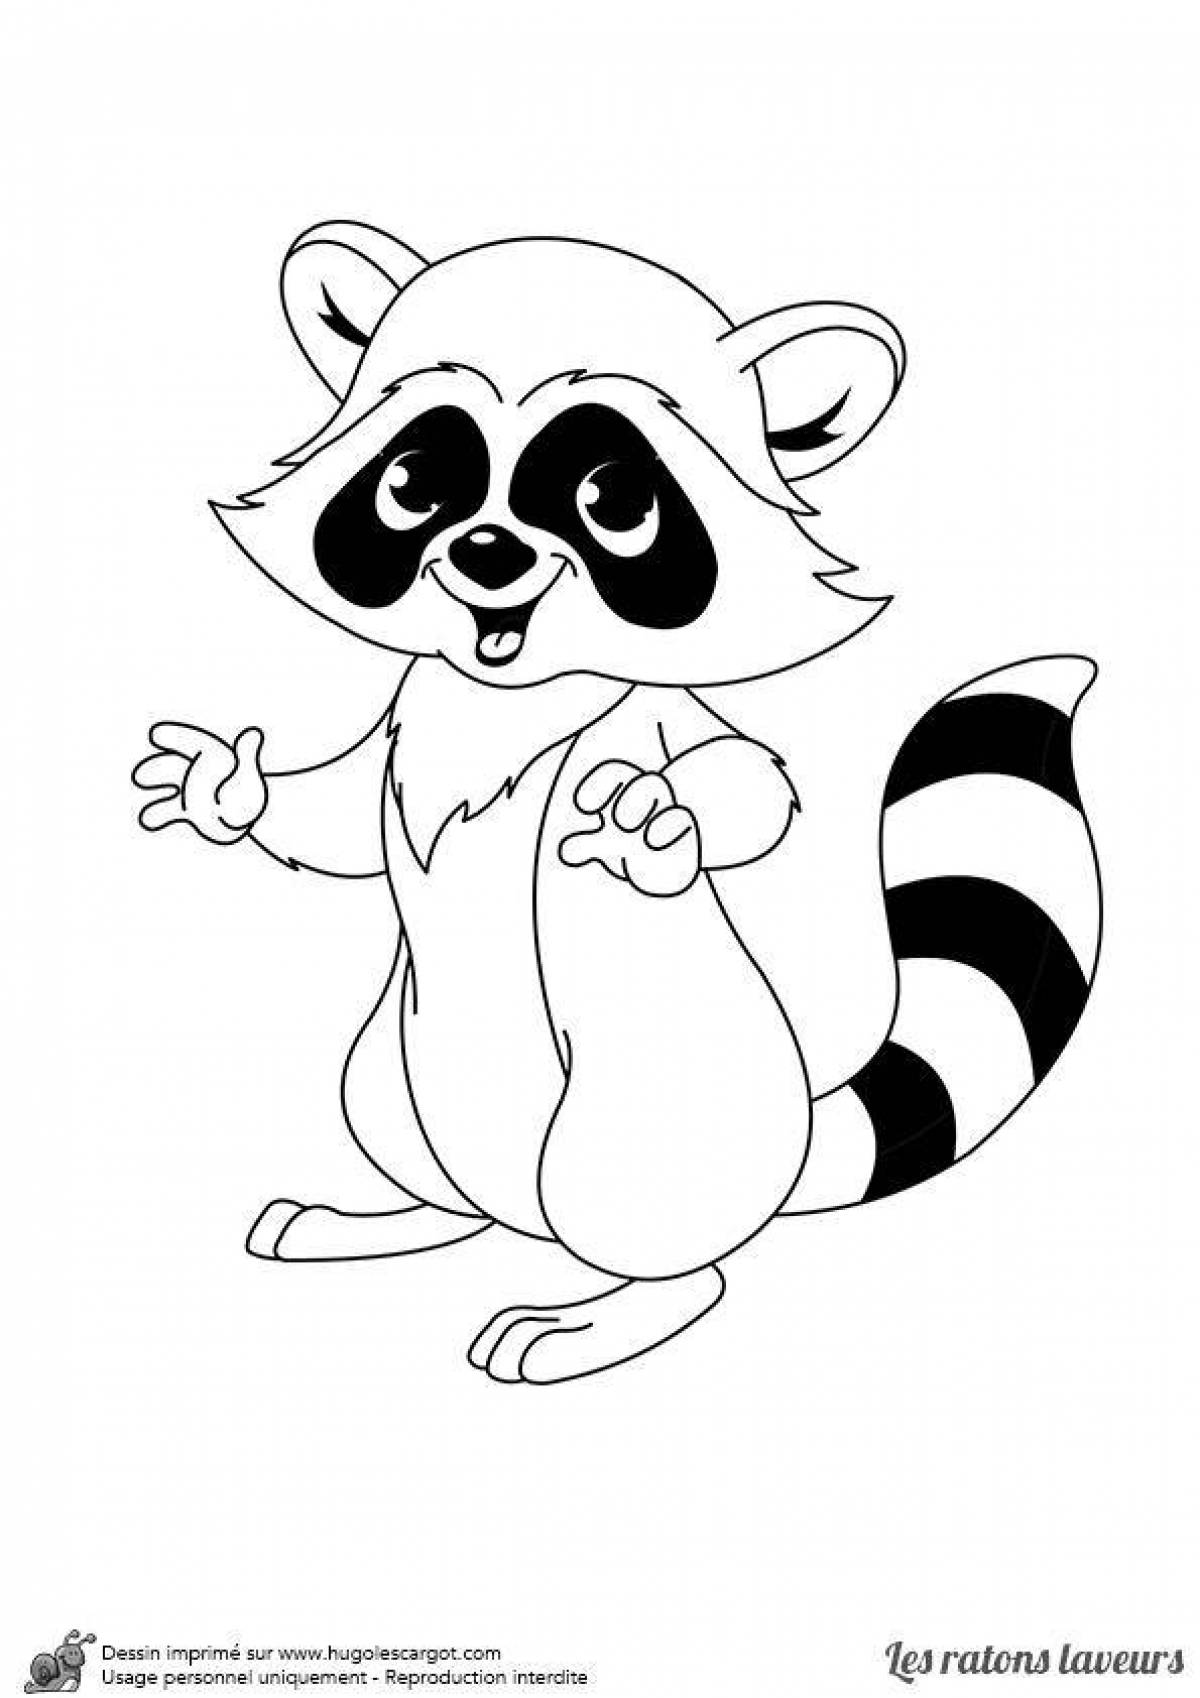 Coloring book magic raccoon for kids